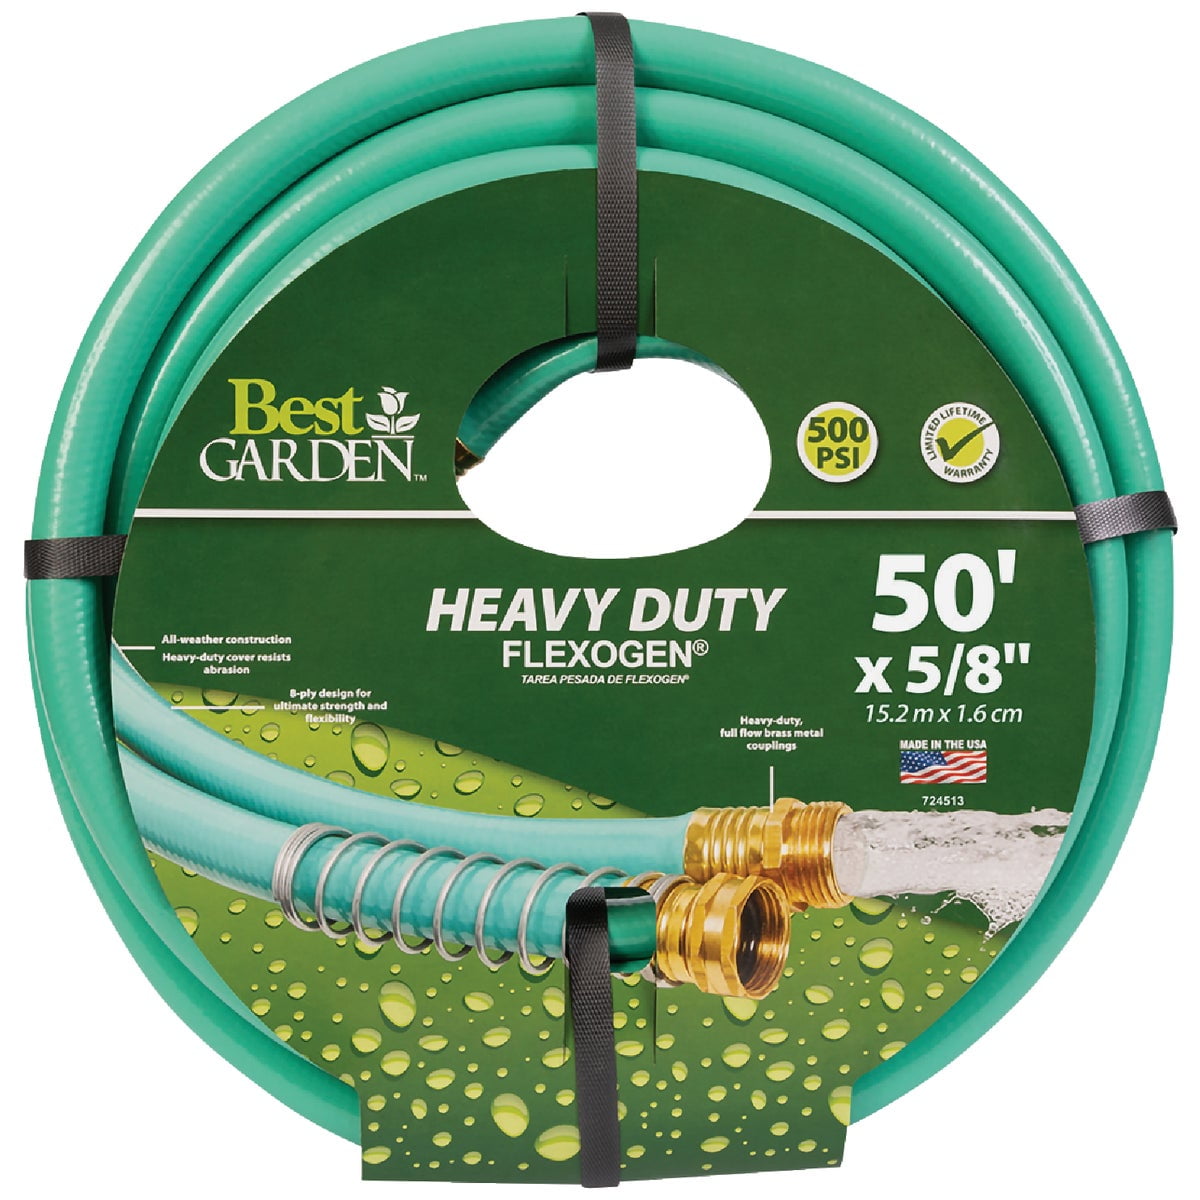 Gray Flexogen Heavy Duty Garden Water Hose Cover Resists Abrasion 